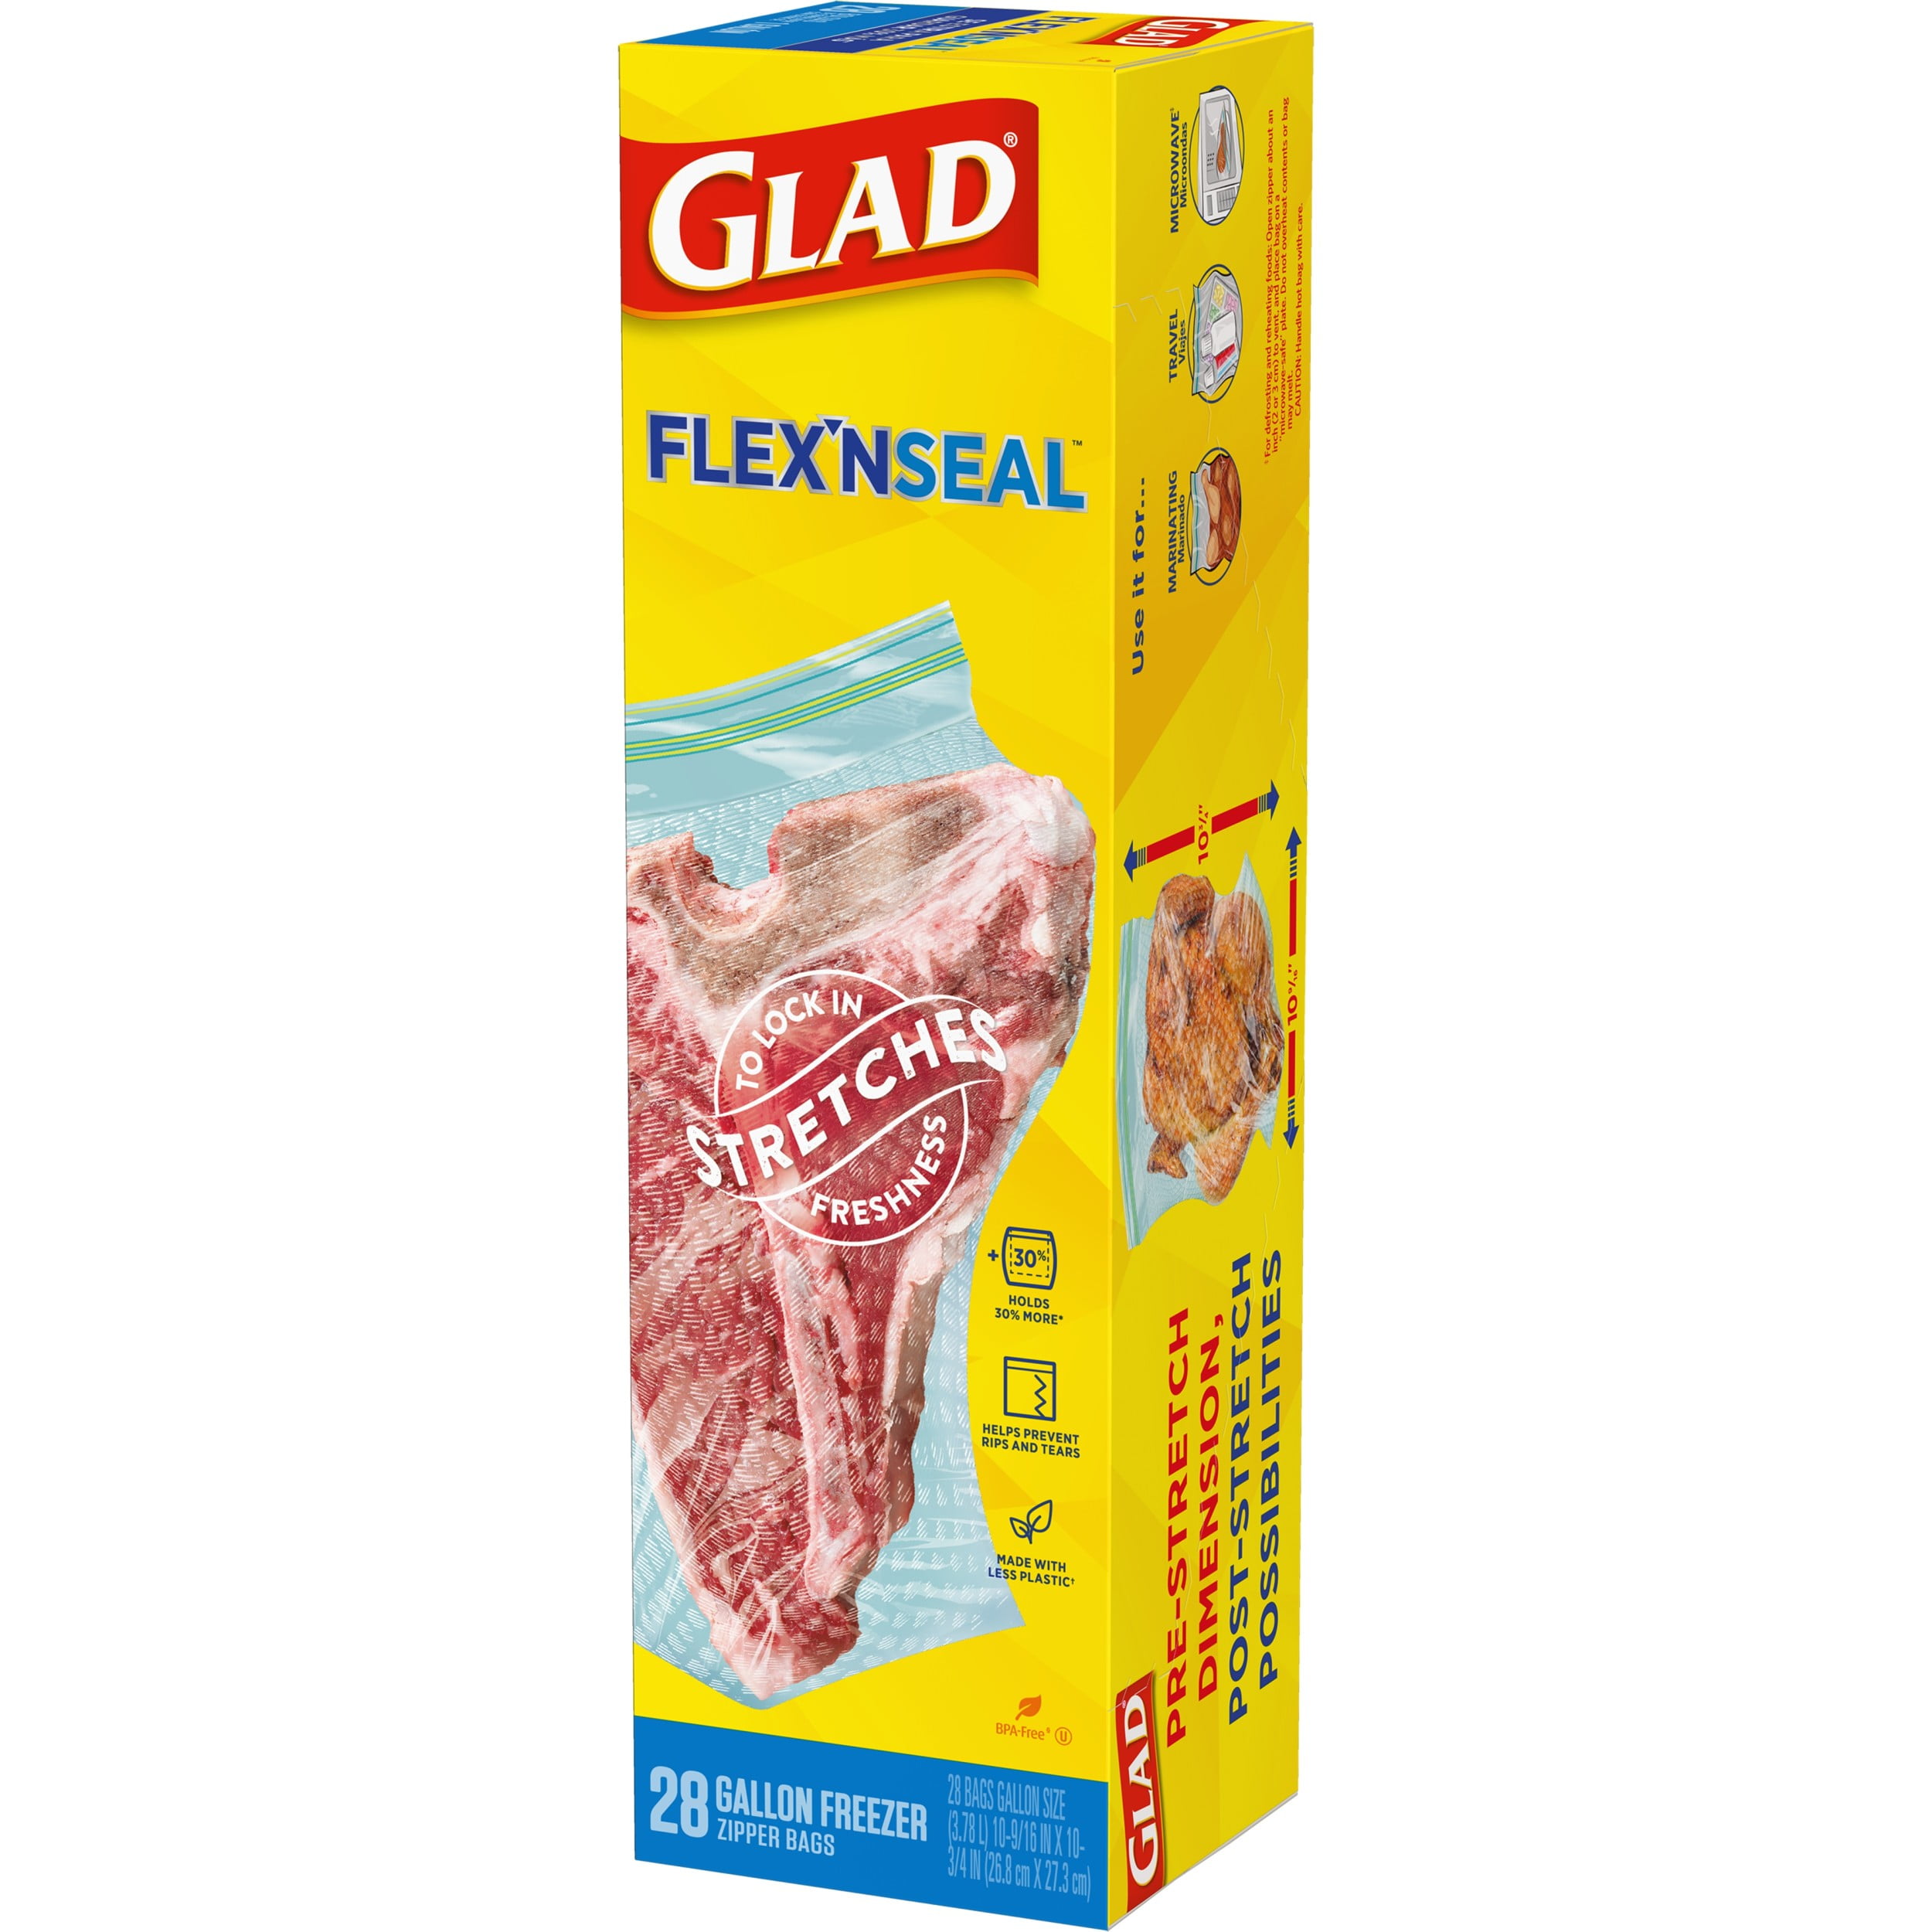 Glad FLEXN SEAL Quart Freezer Storage Plastic Bags, 35 ct - Harris